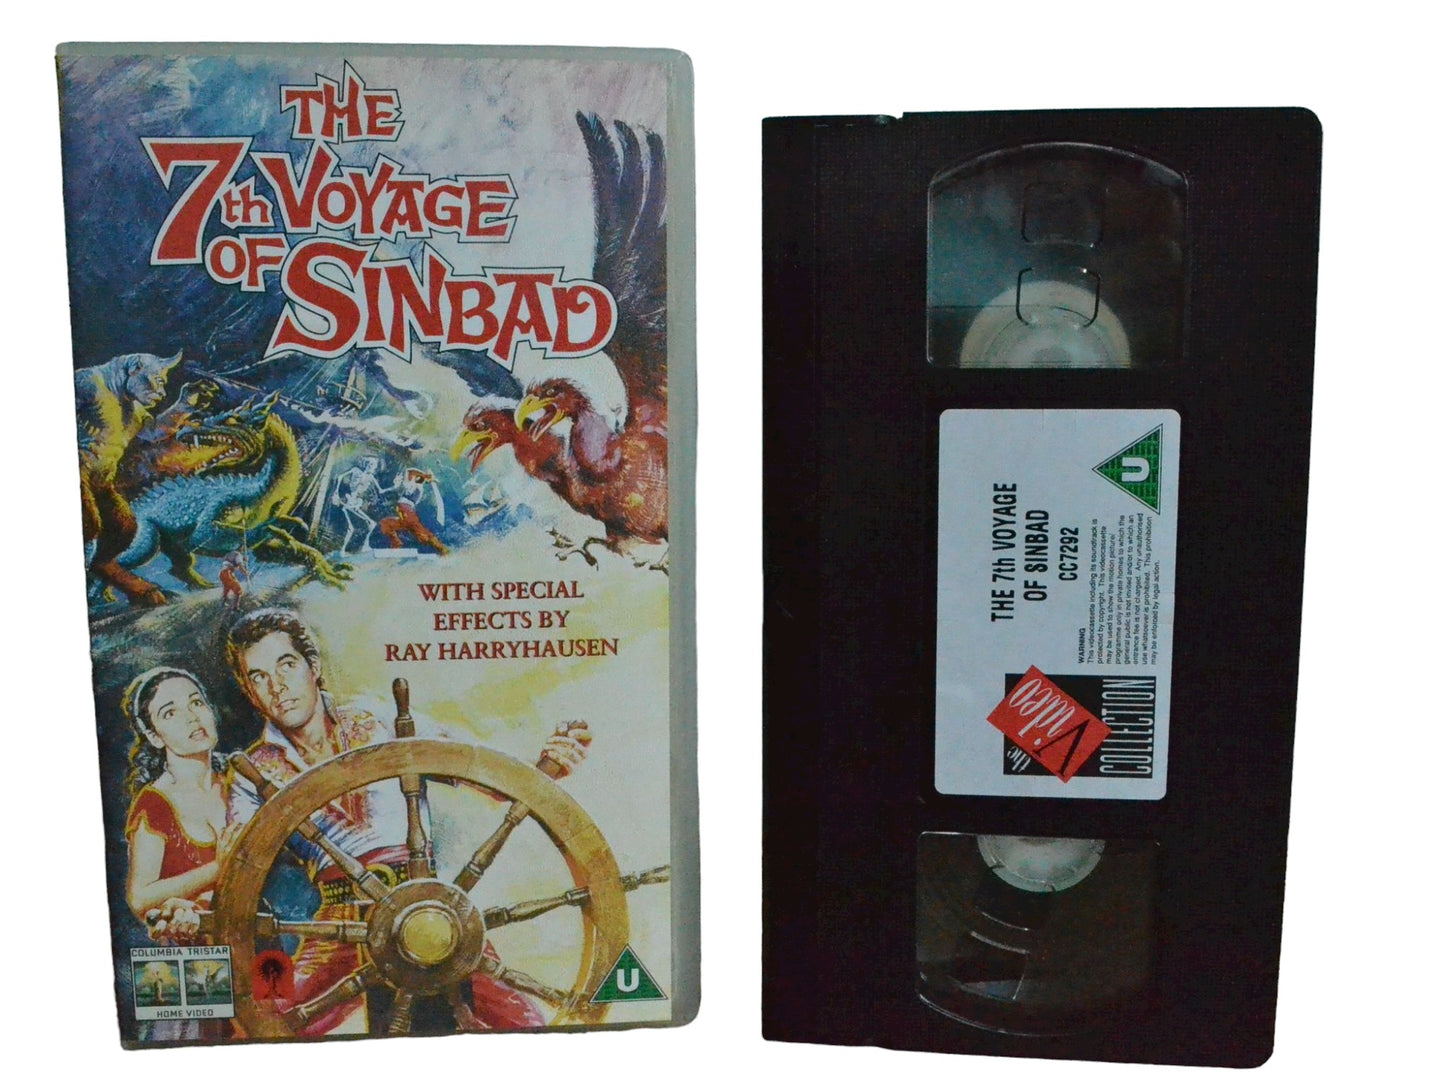 The 7th Voyage Of Sinbad - Kerwin Mathews - Cinema Club - Childrens - PAL - VHS-